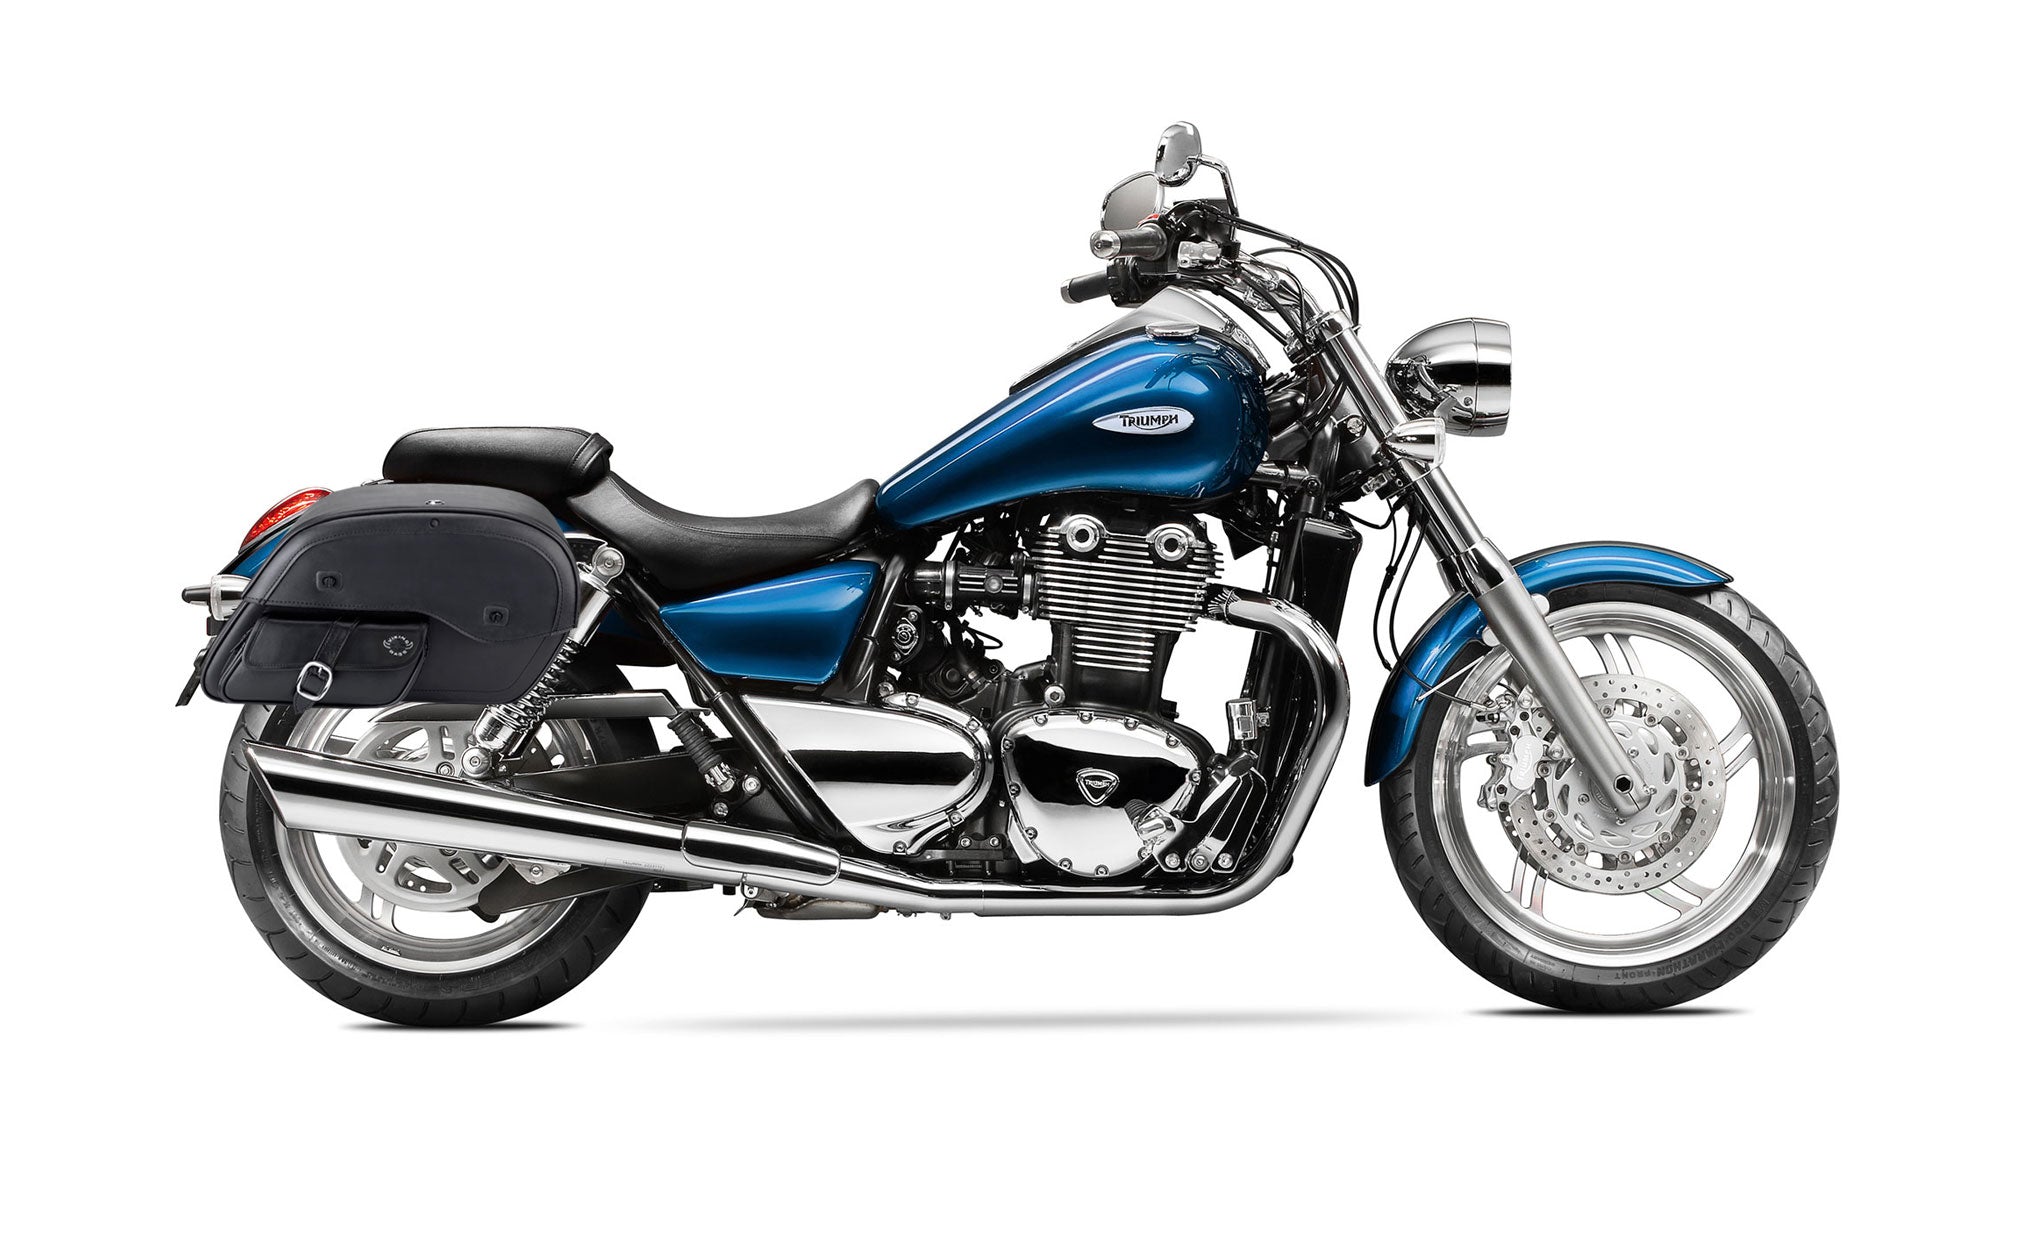 Viking Essential Side Pocket Large Triumph Thunderbird Leather Motorcycle Saddlebags on Bike Photo @expand